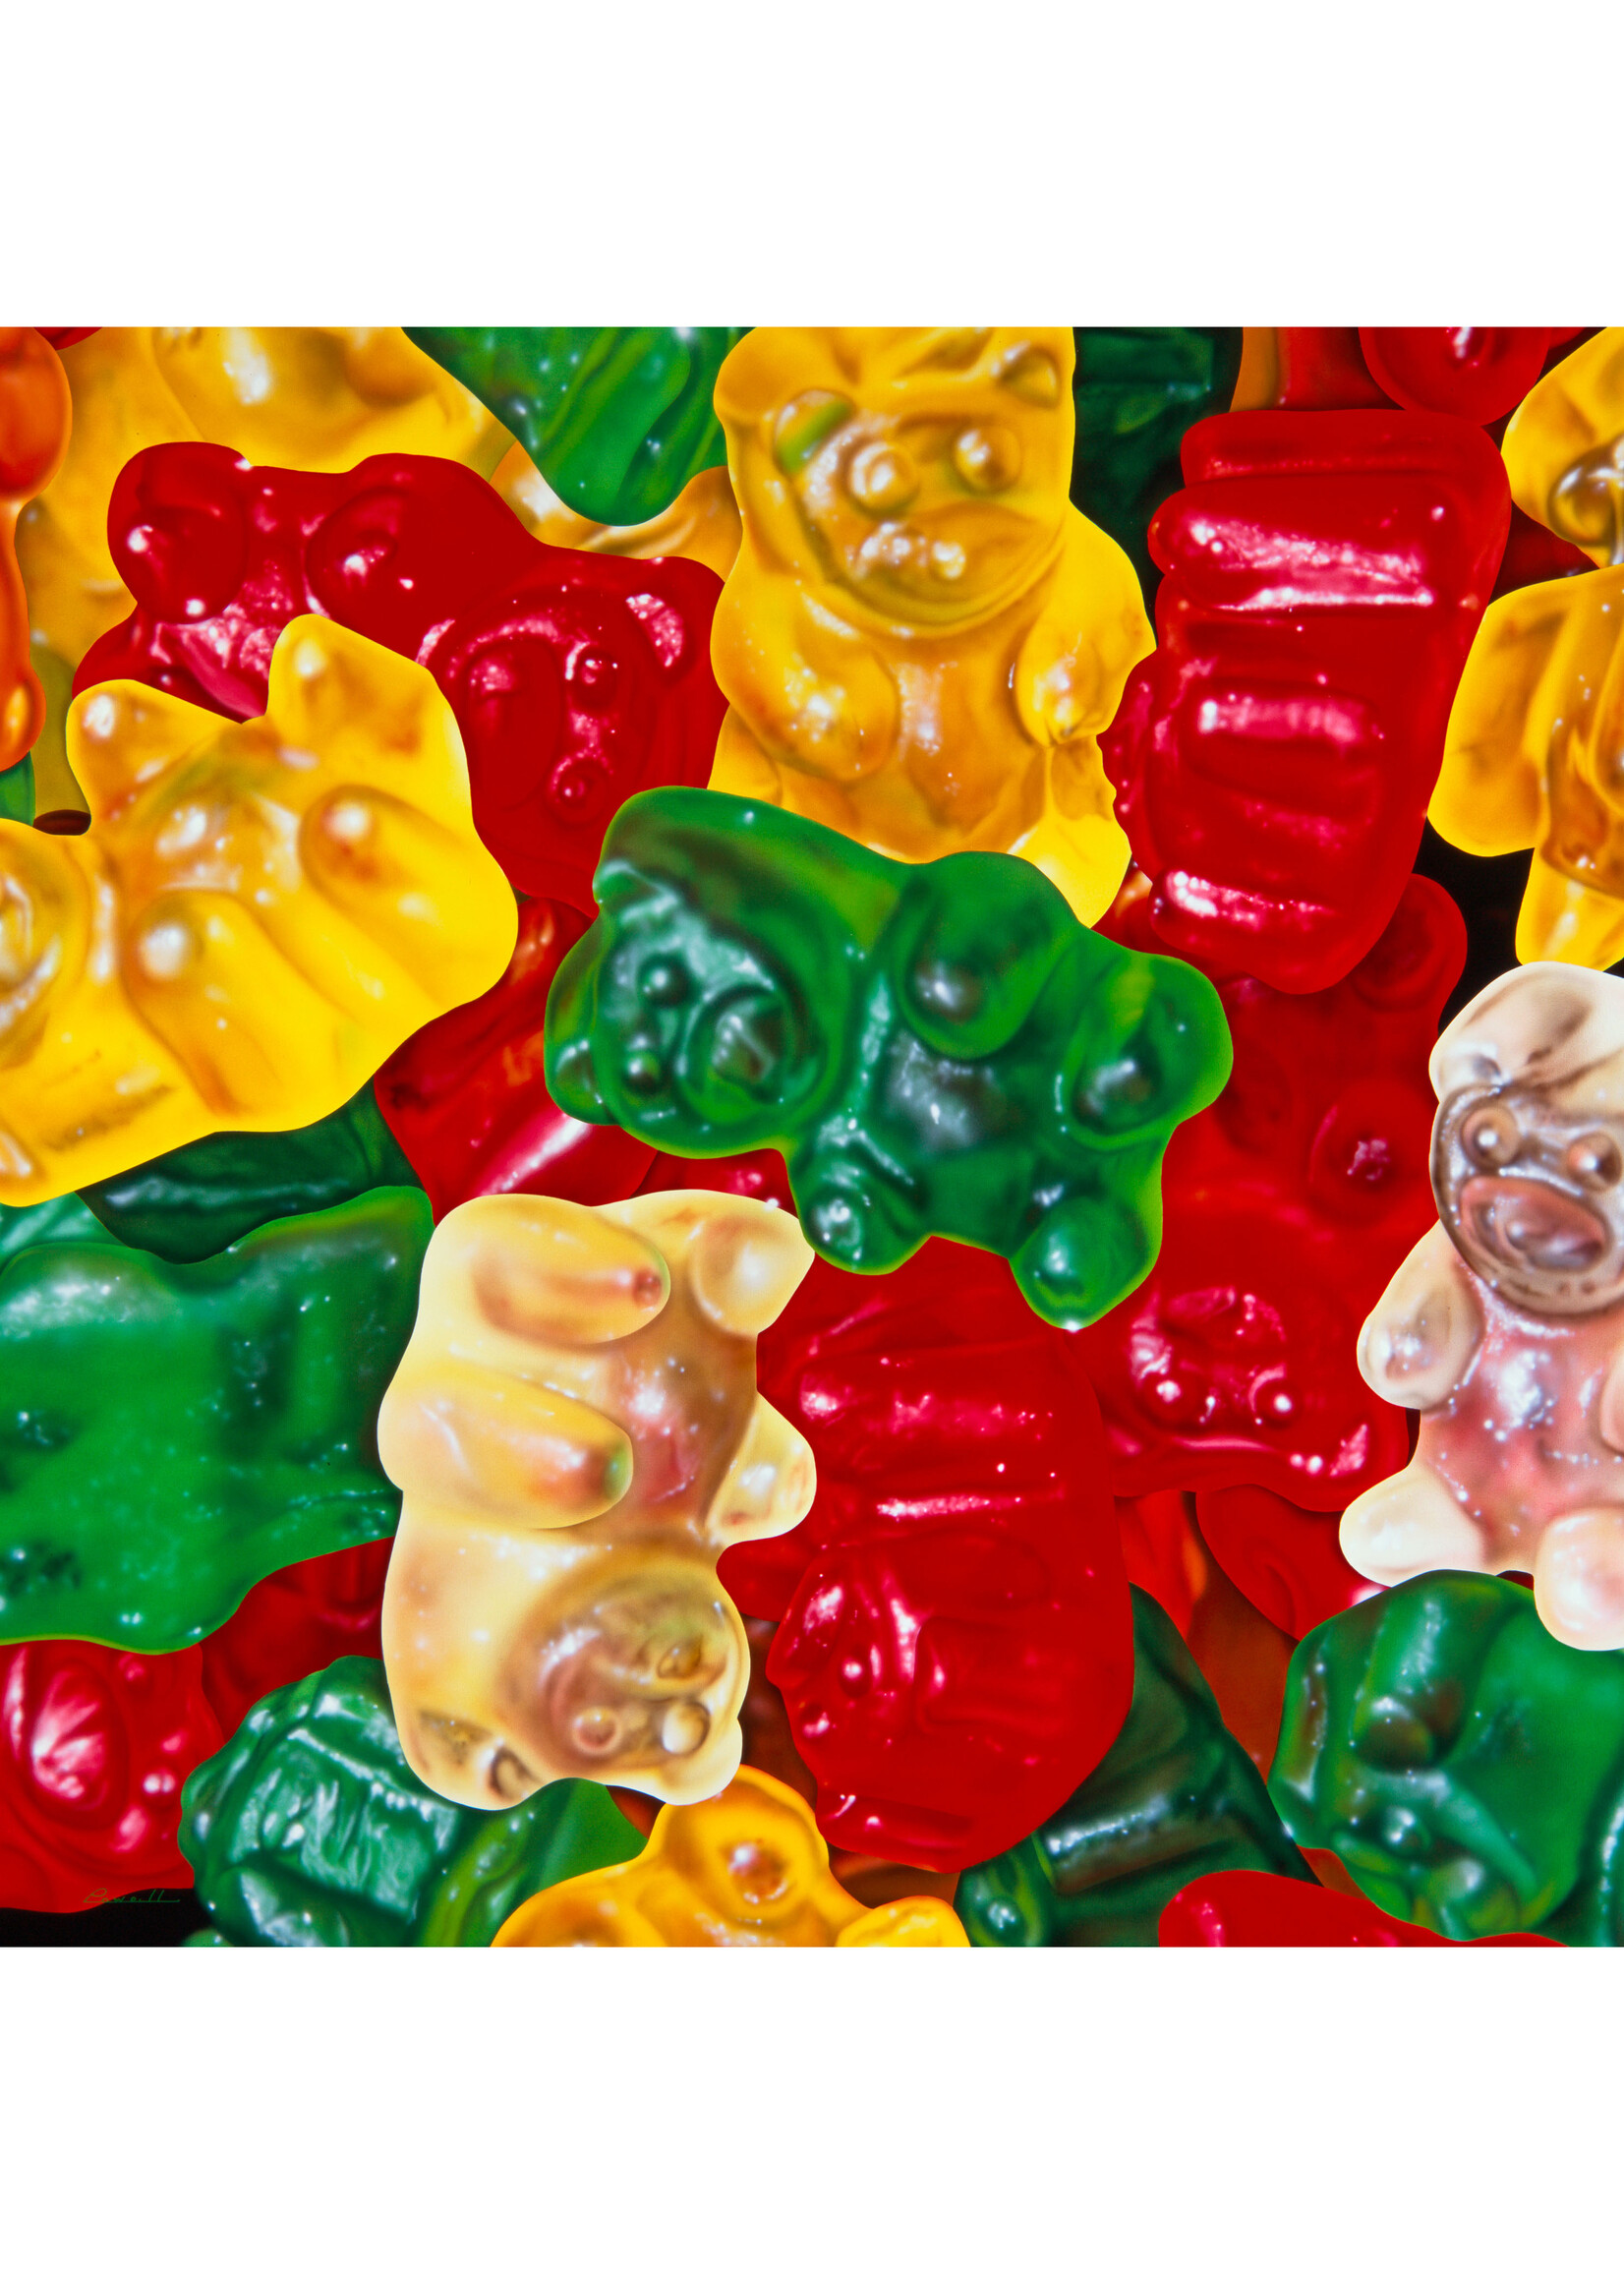 Peter & Madeline Powell Peter & Madeline Powell "Gummy Bears"